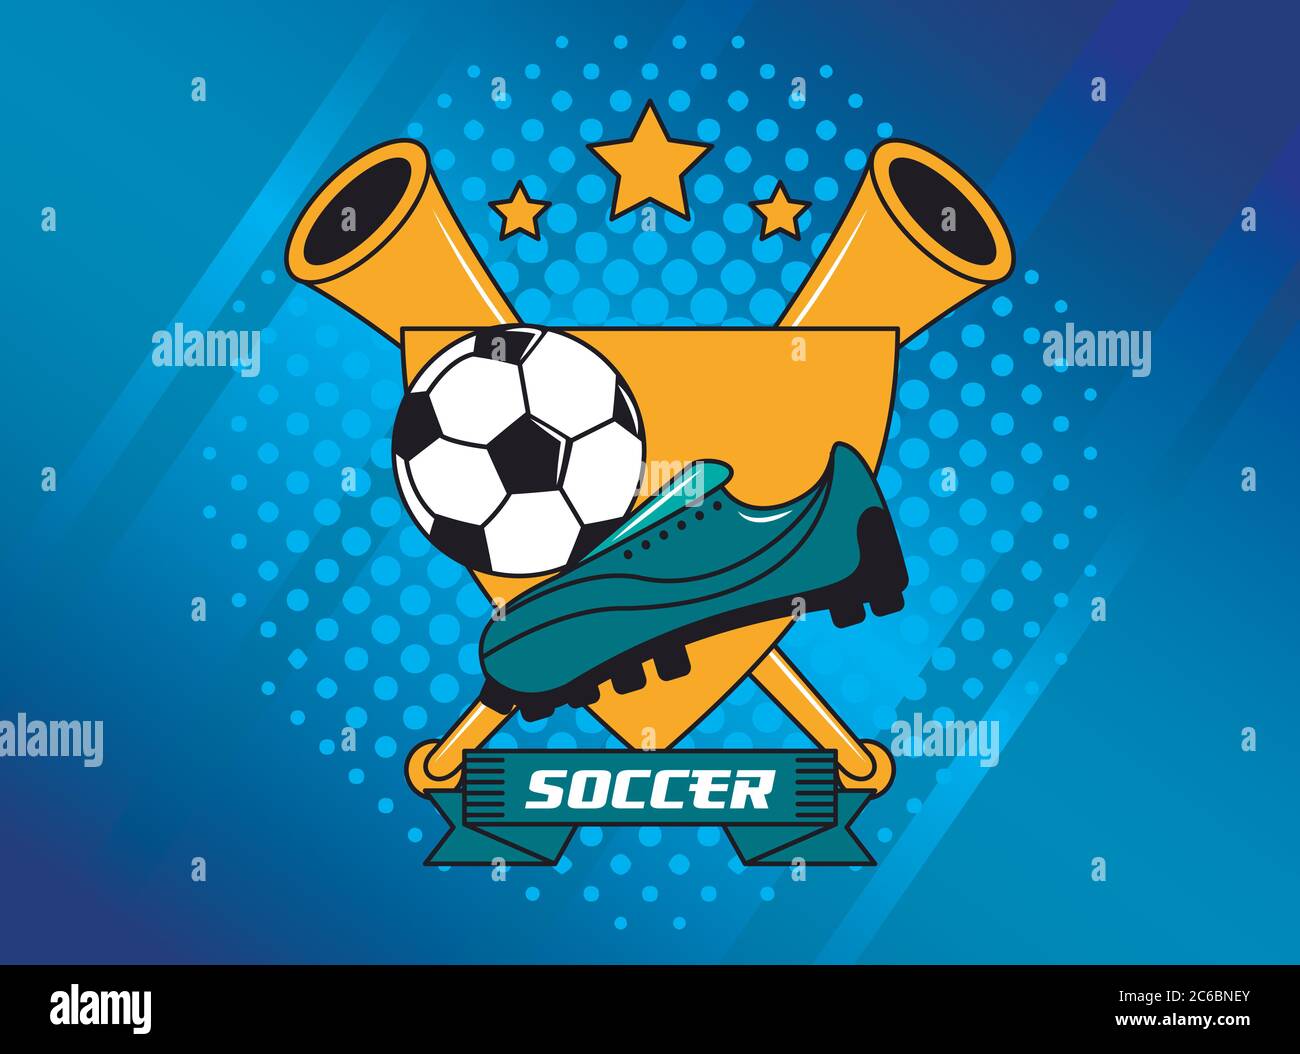 football soccer sport poster with balloon vector illustration design Stock Vector